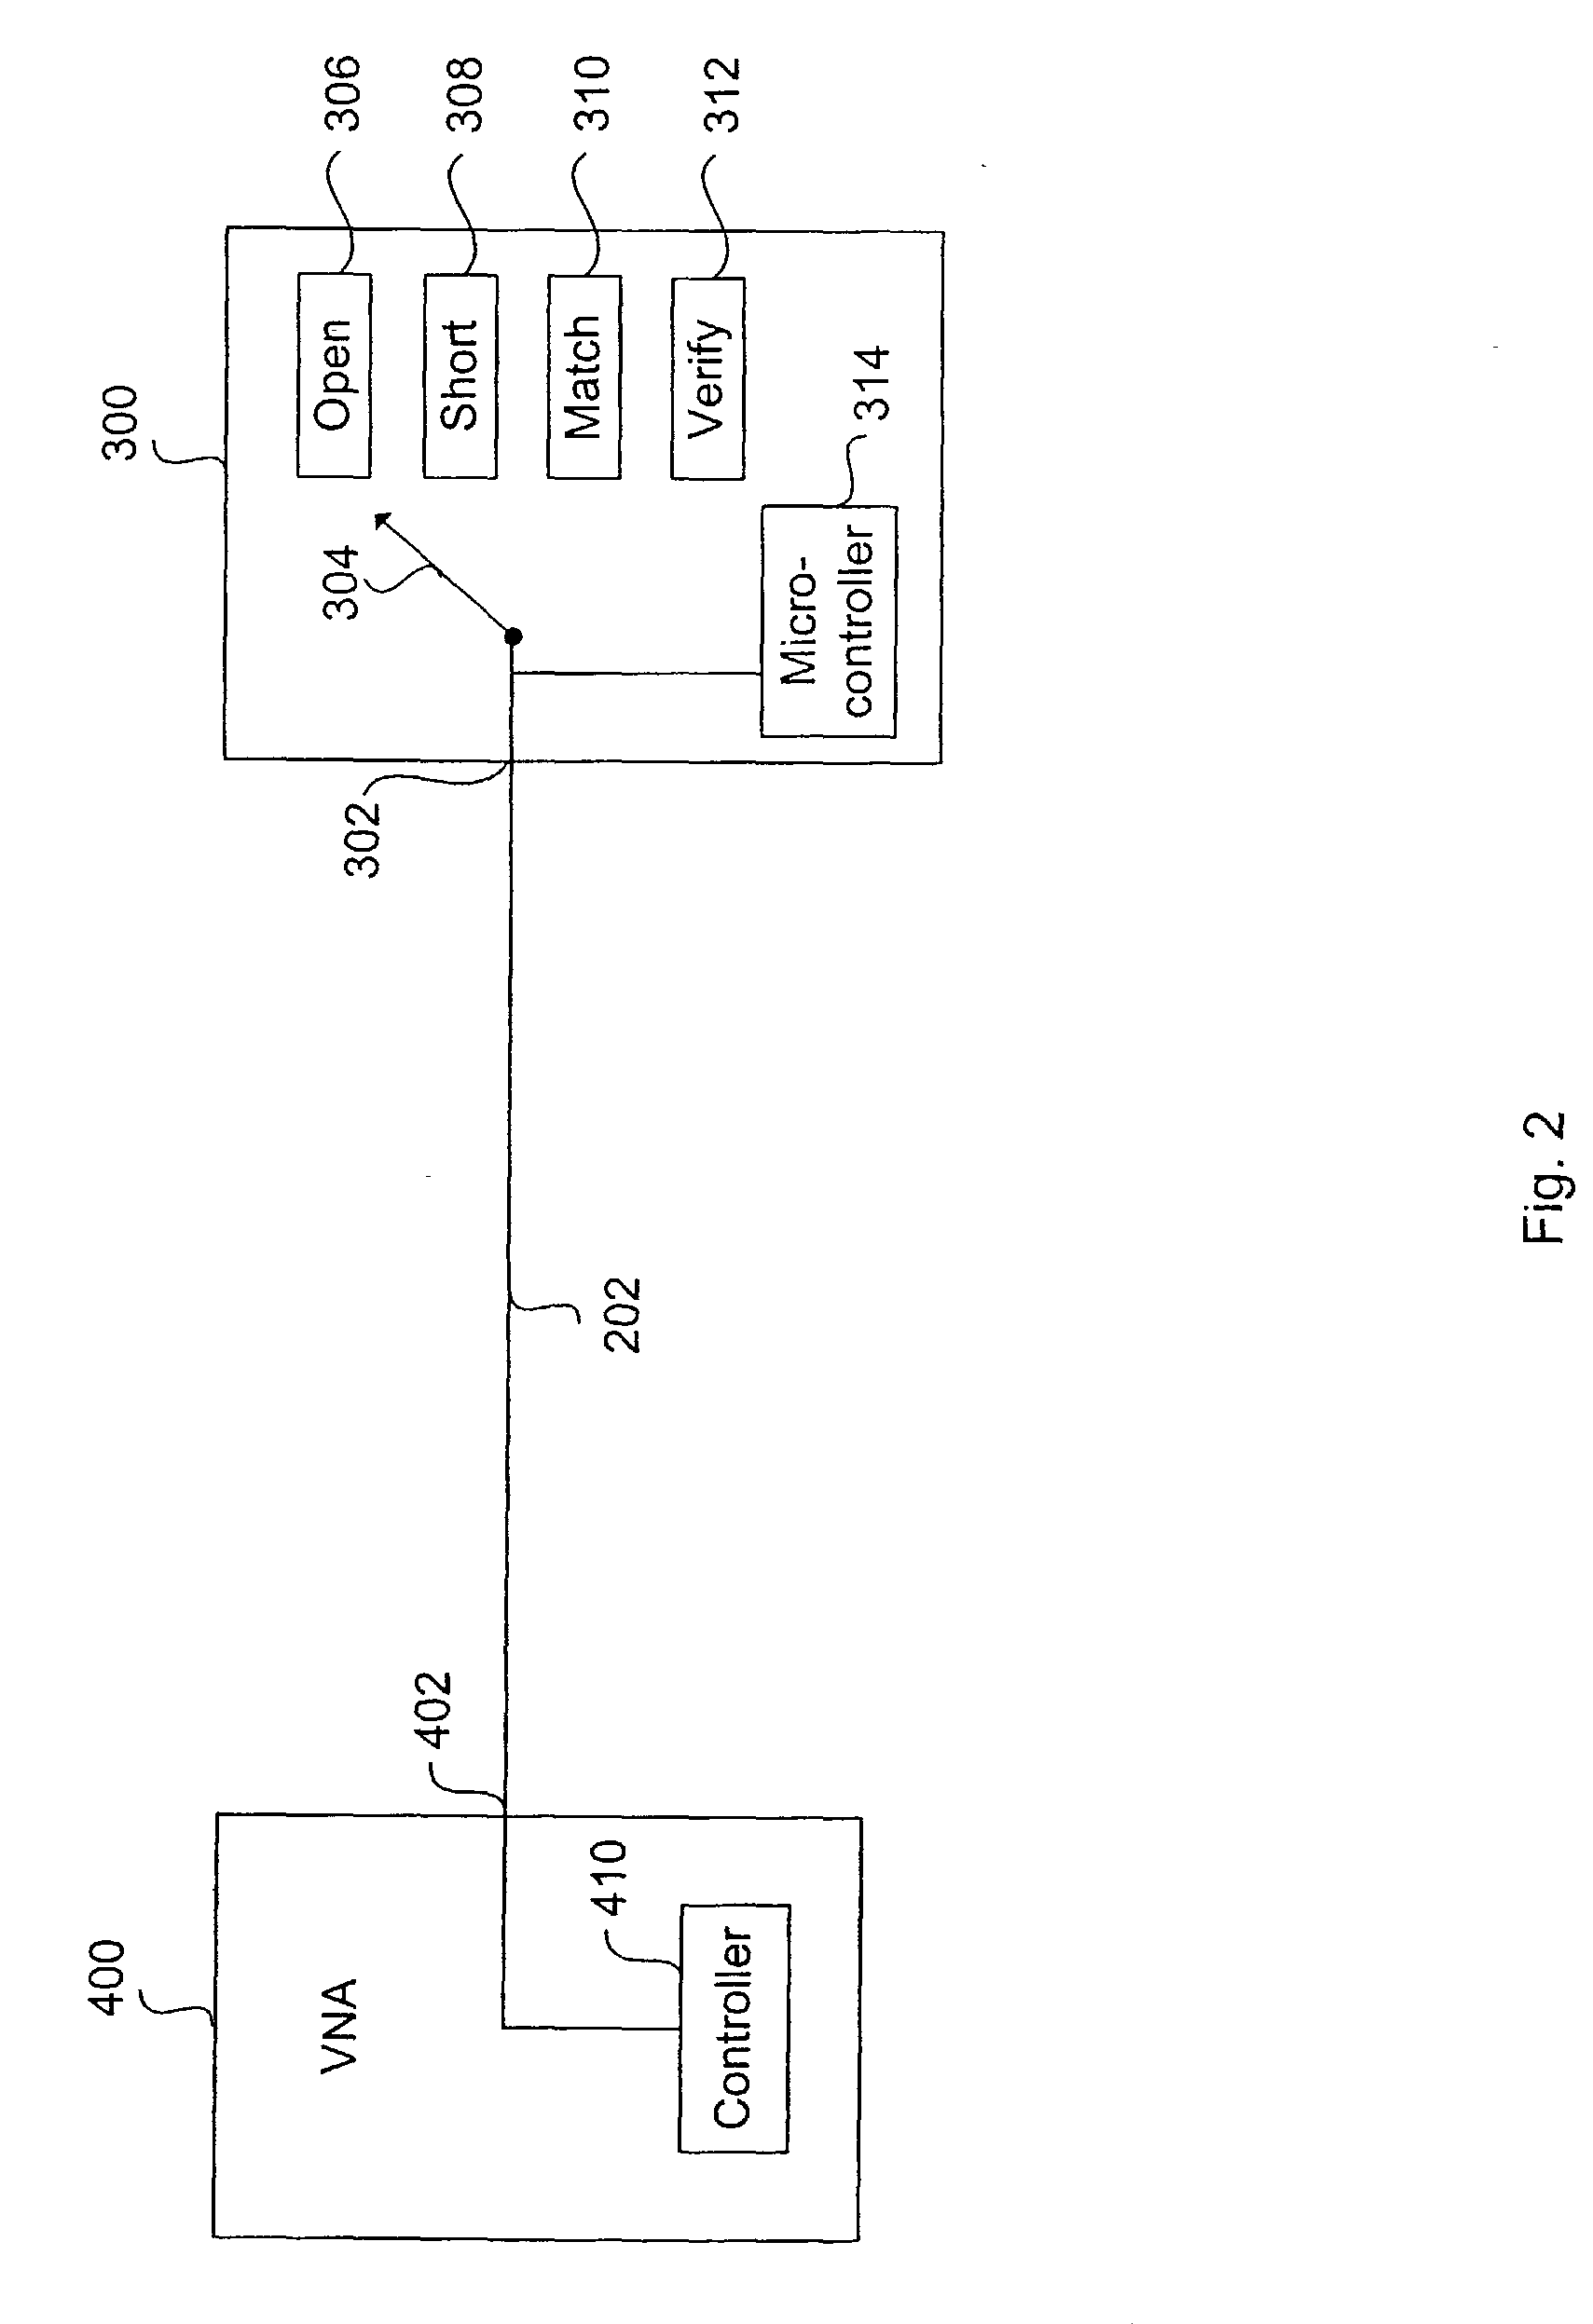 Single port single connection VNA calibration apparatus